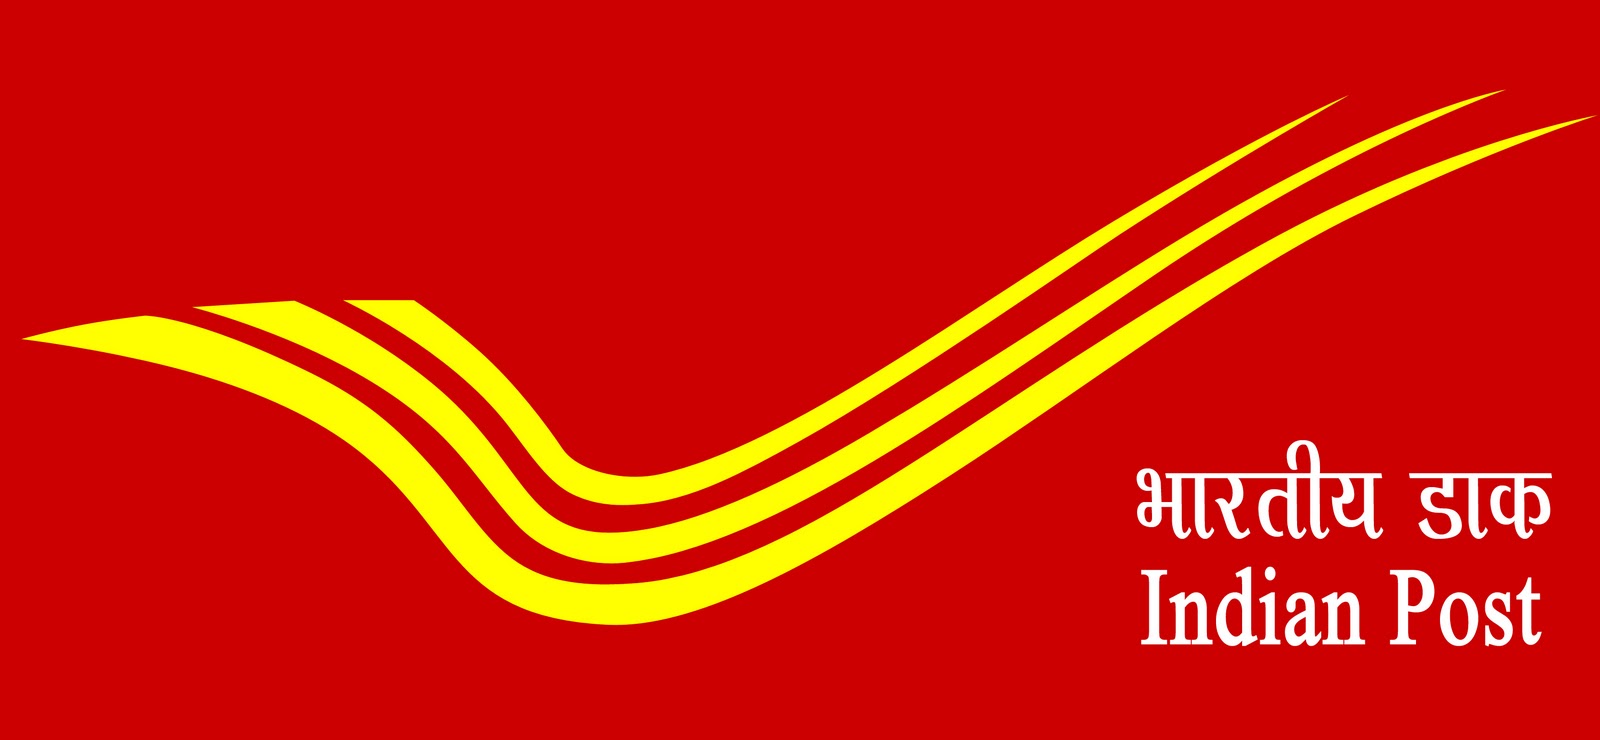 UPU – Universal Postal Union Logo [PDF] | Union logo, Logo pdf, ? logo